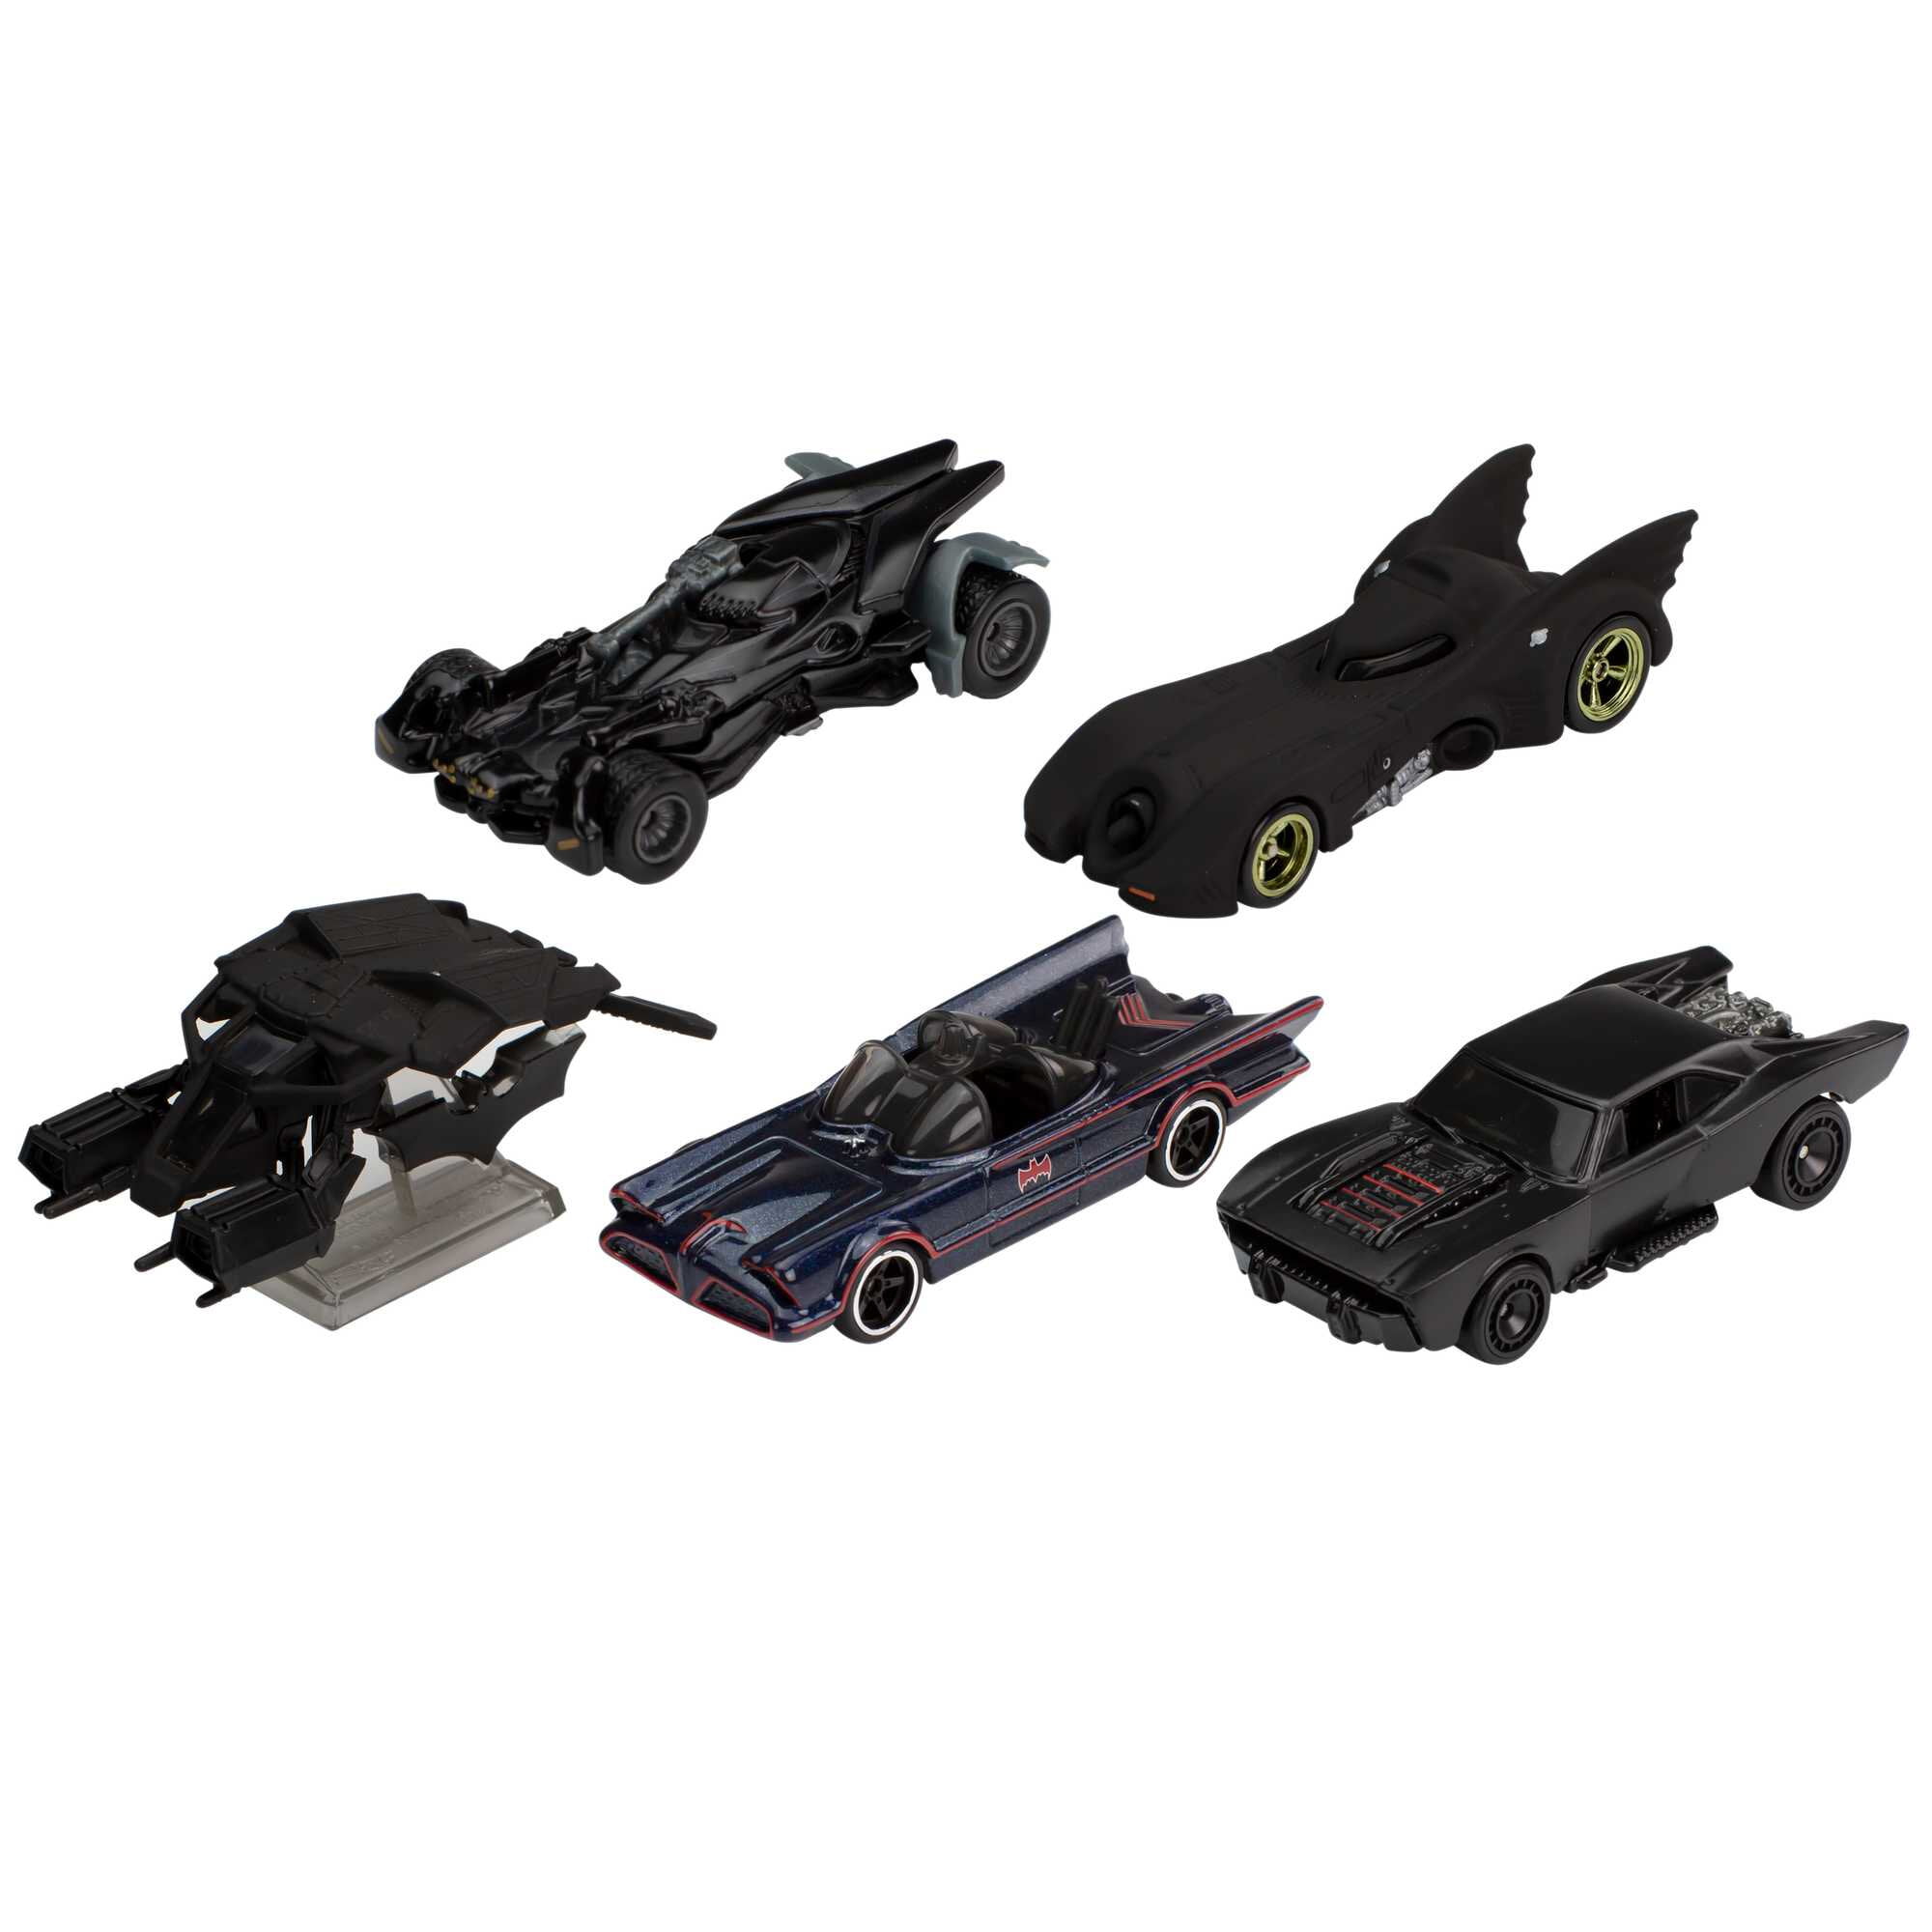 Hot Wheels Die-cast Metal The Bat Batman Vehicle W/ Stand Package Slight Damaged 